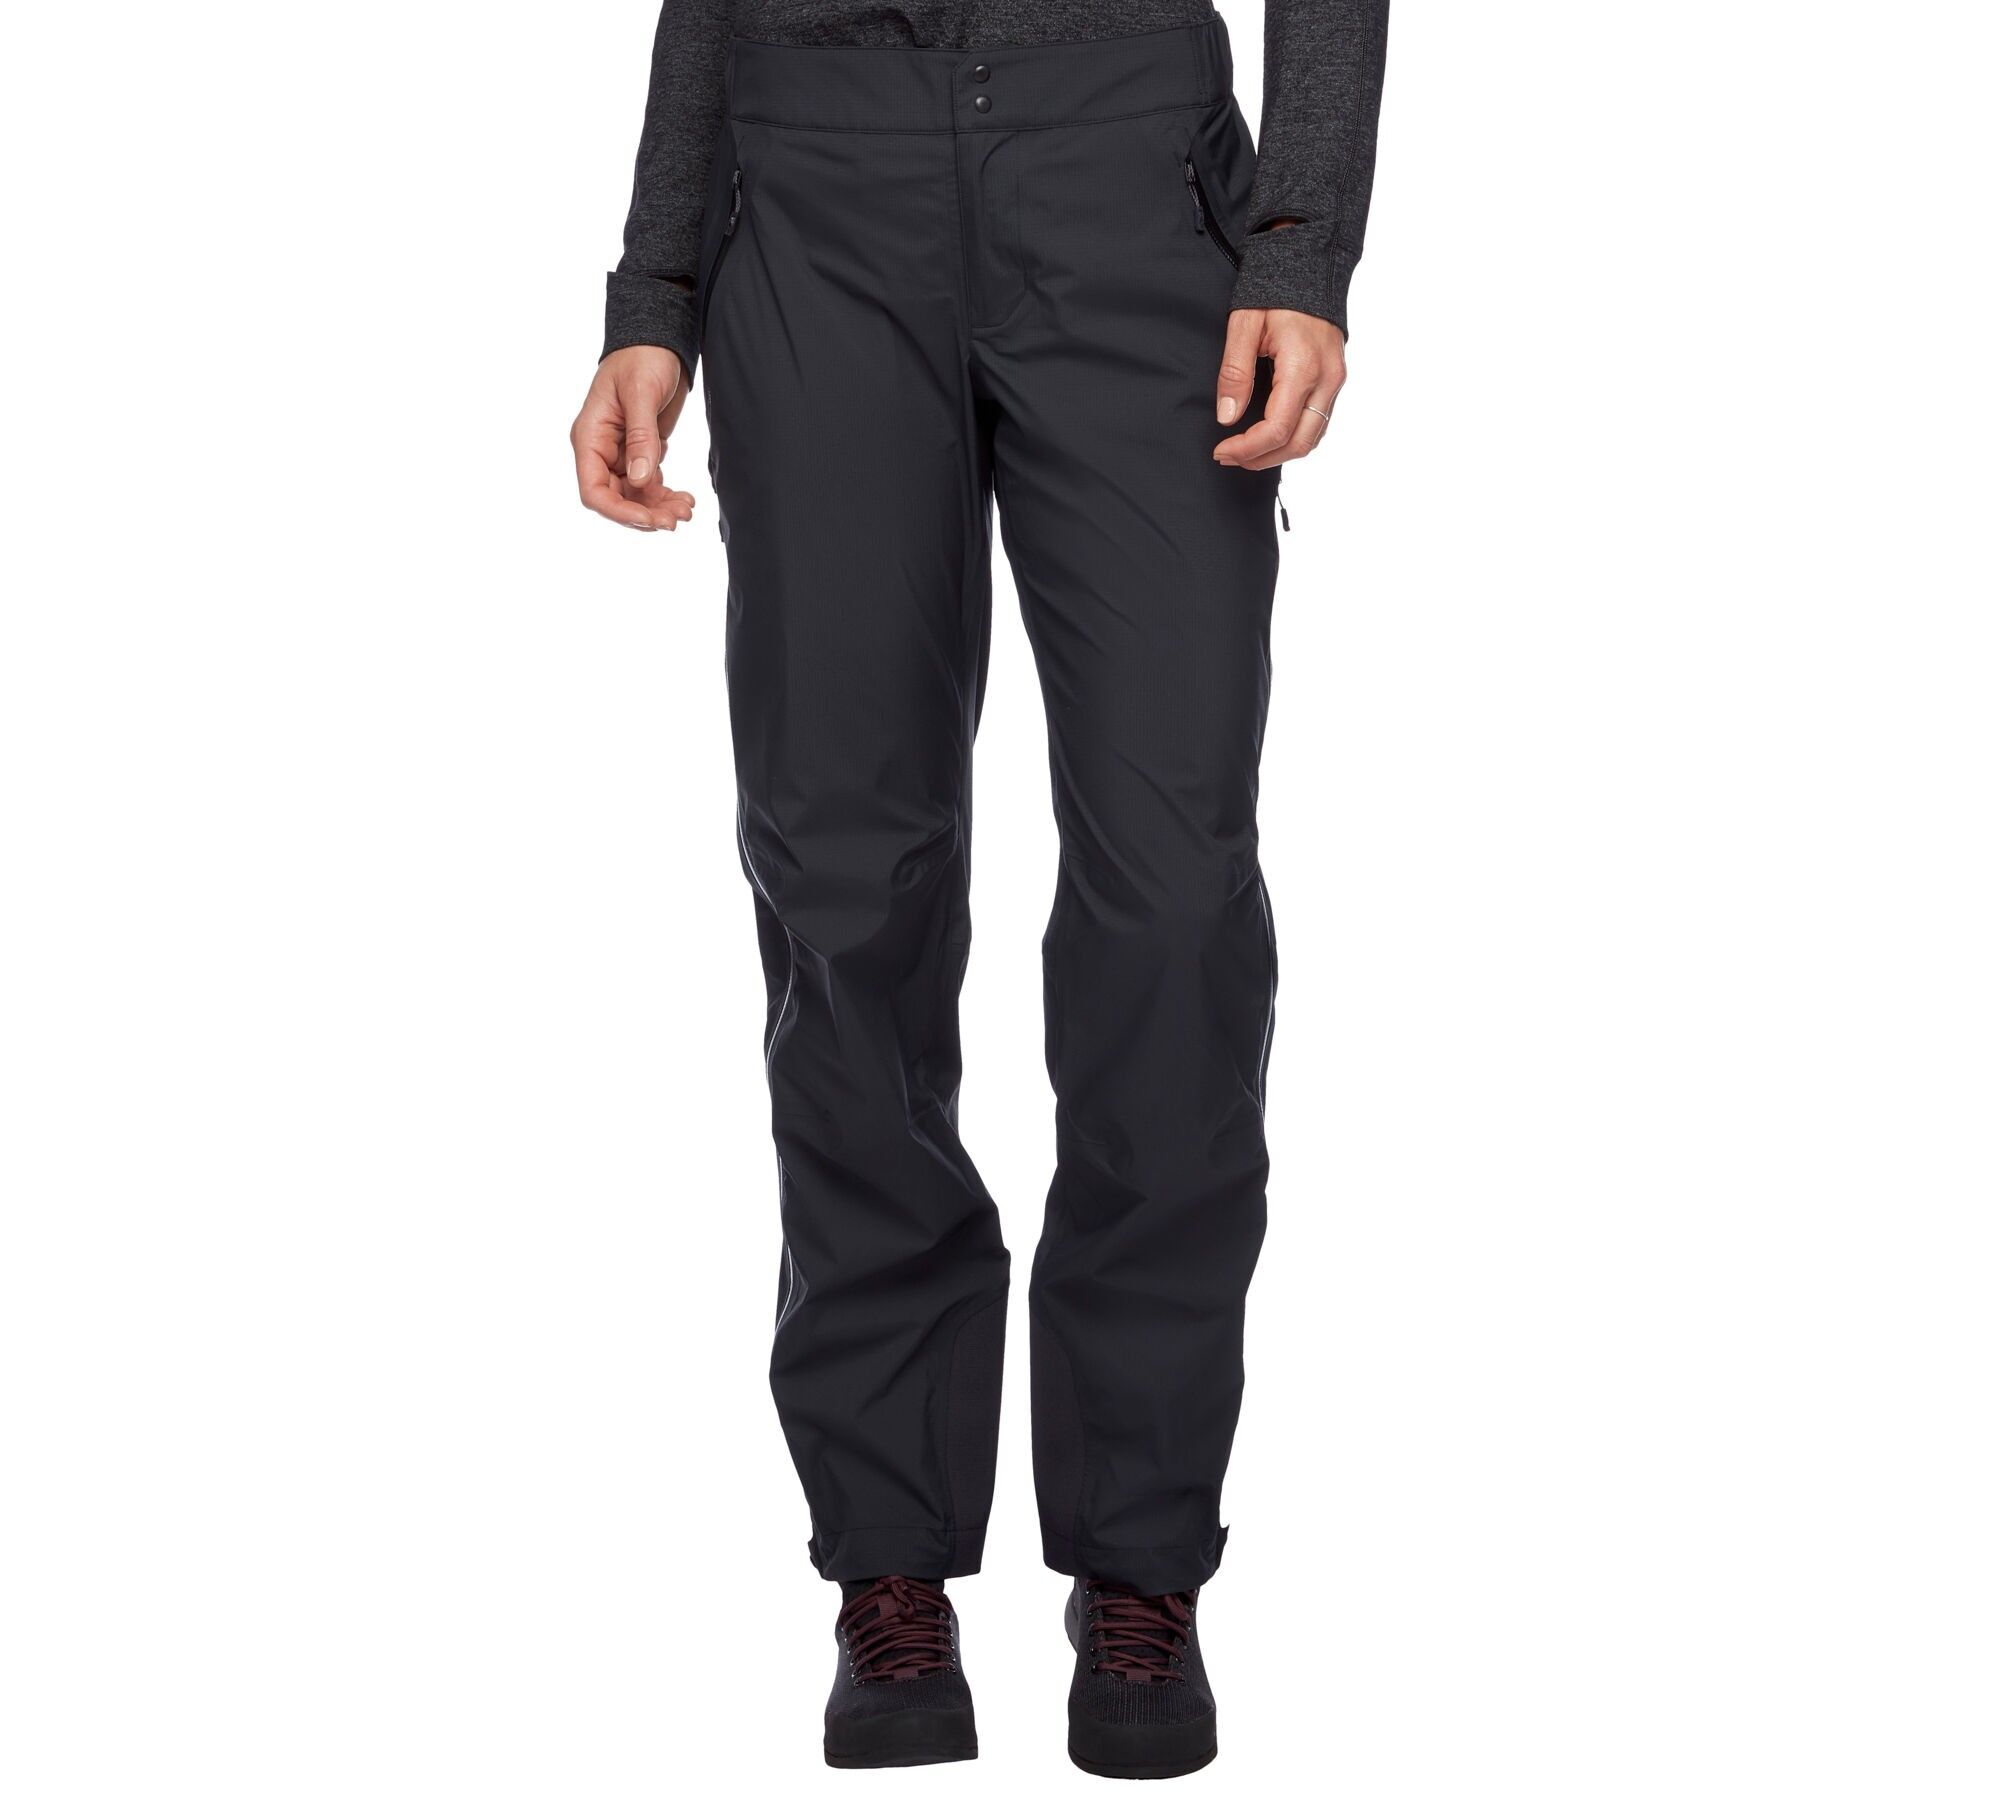 Black Diamond Highline Stretch Pants - Mountaineering trousers - Women's